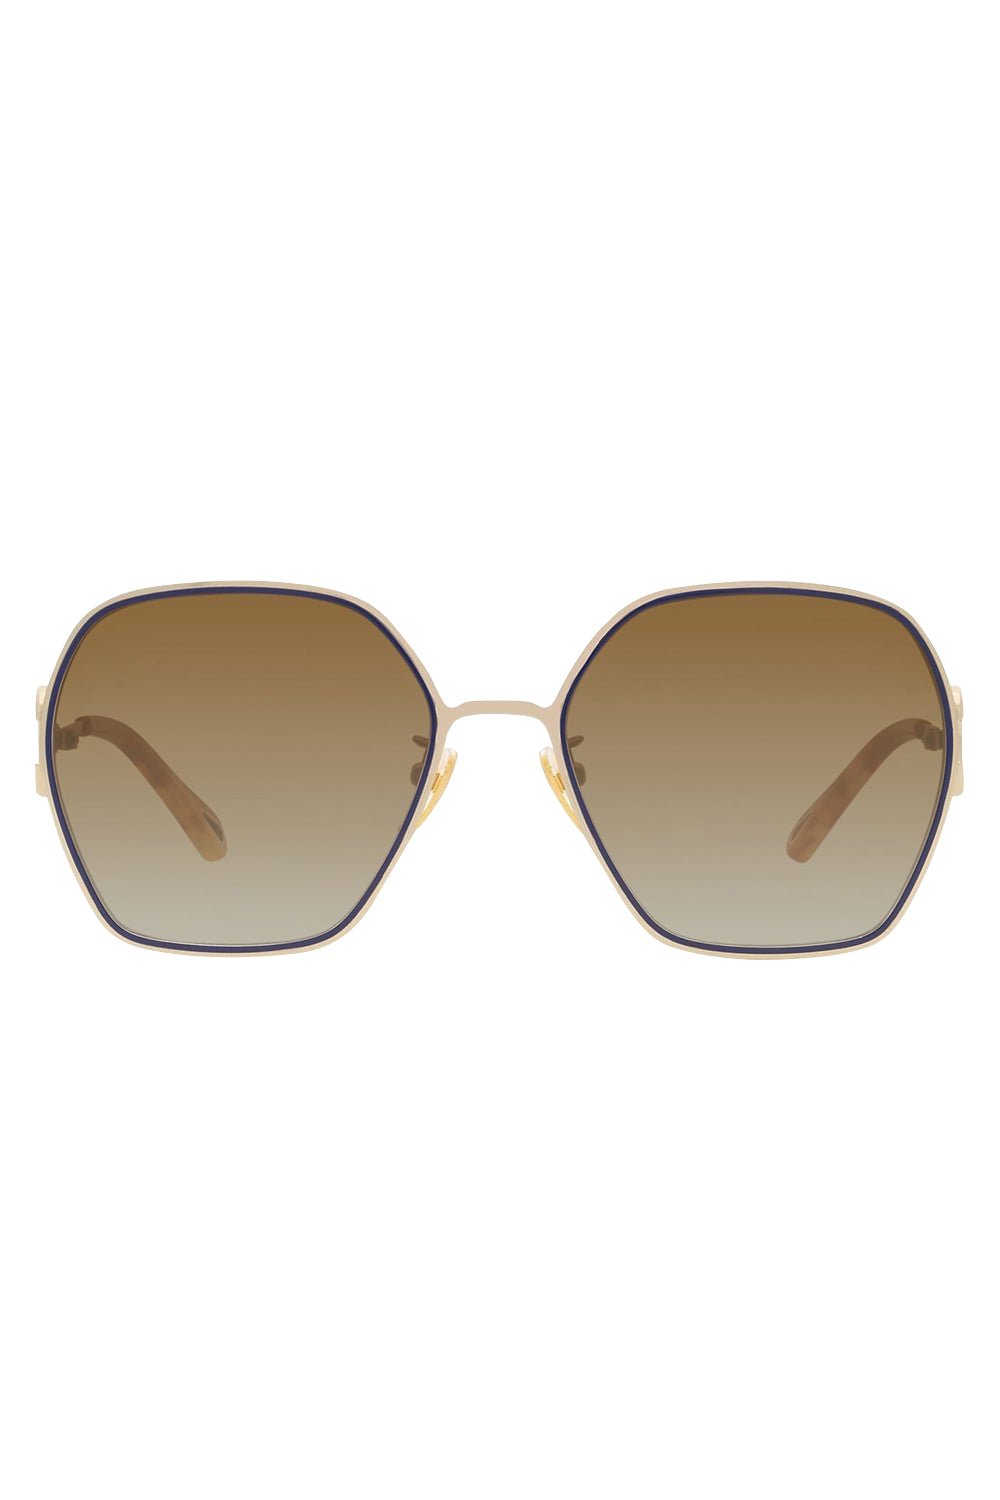 CHLOÉ-Hexagon Sunglasses-GOLD/BROWN